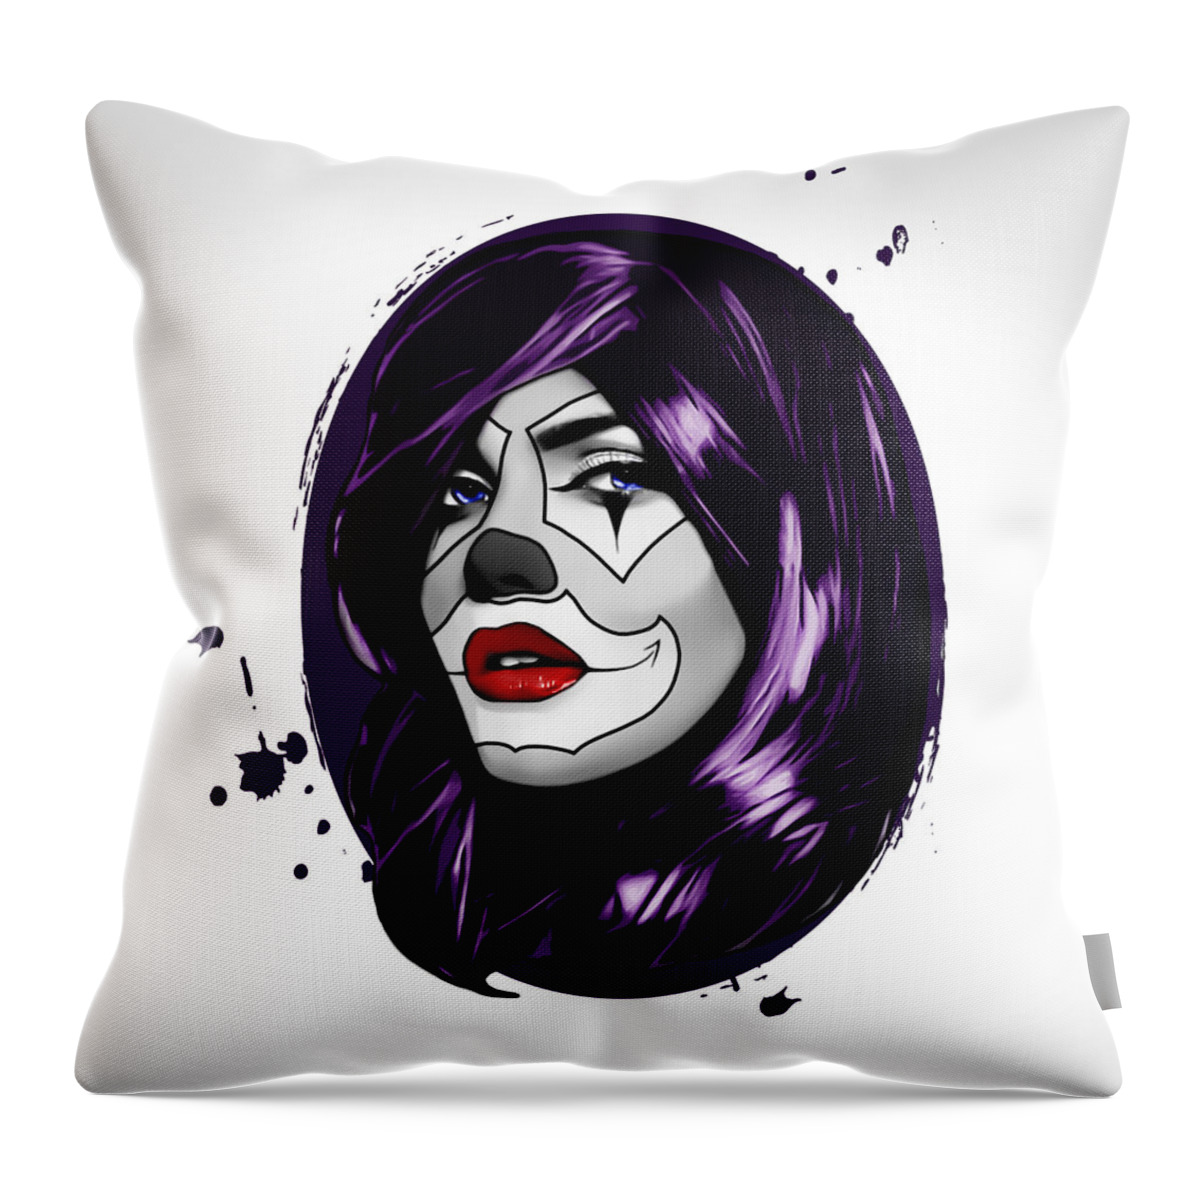 Clown Throw Pillow featuring the digital art Clown Girl by Nicklas Gustafsson